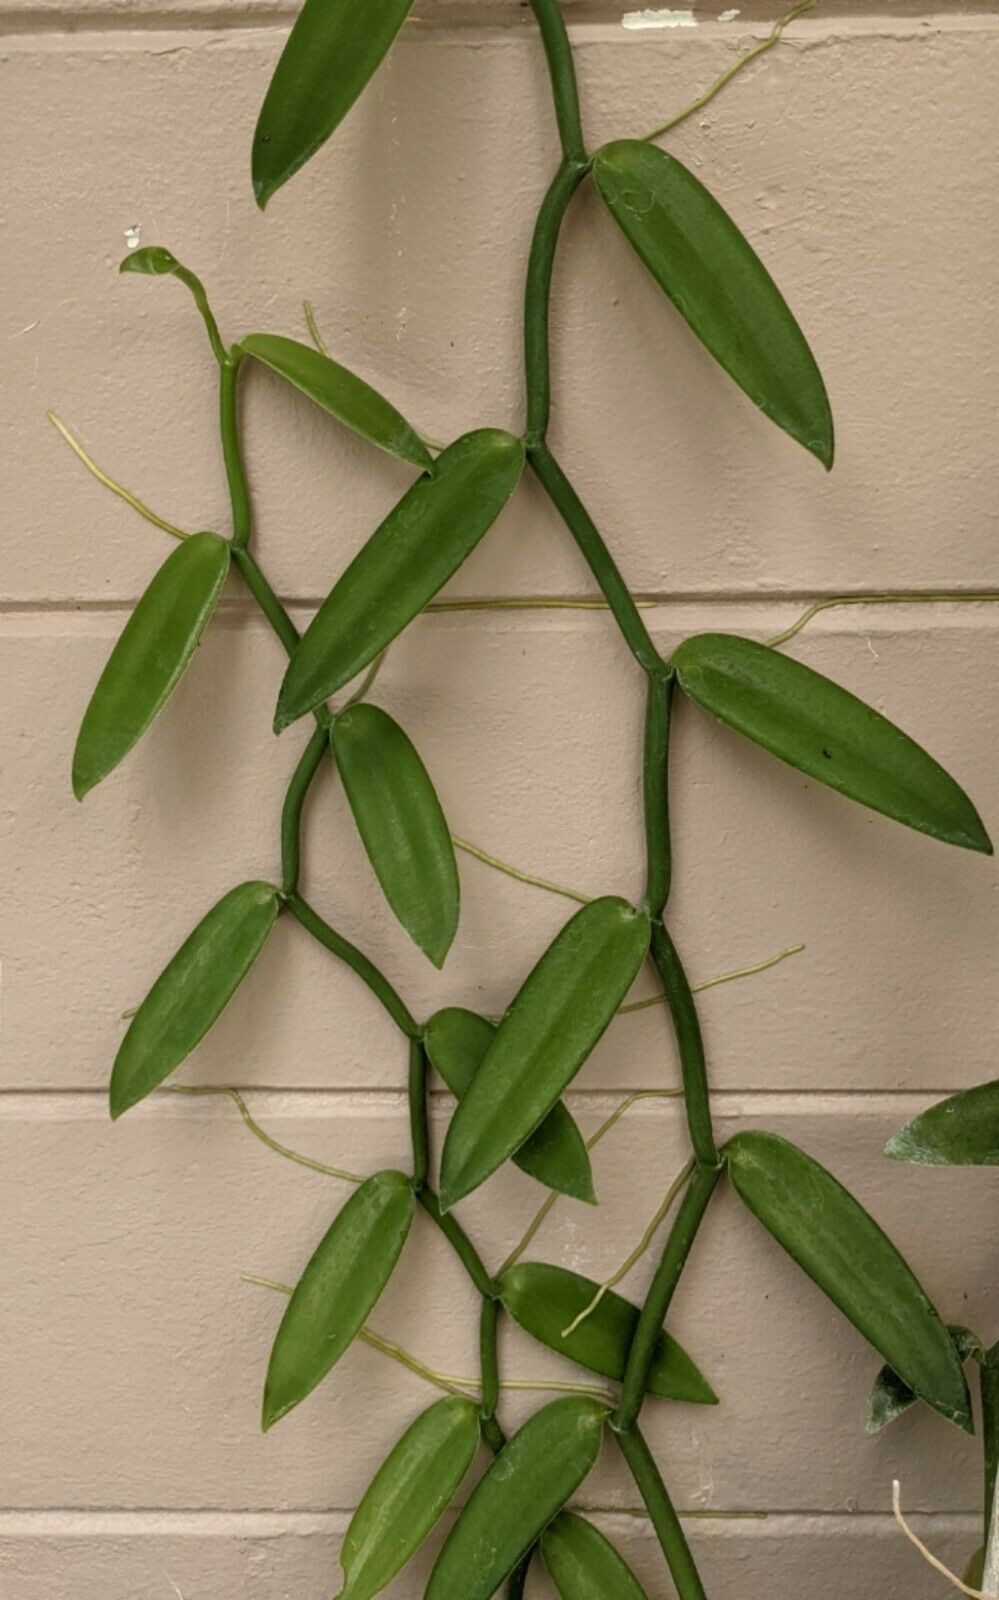 Vanilla Planifolia, Vanilla Bean Orchid, Two 2 Node Cuttings, Live Plant